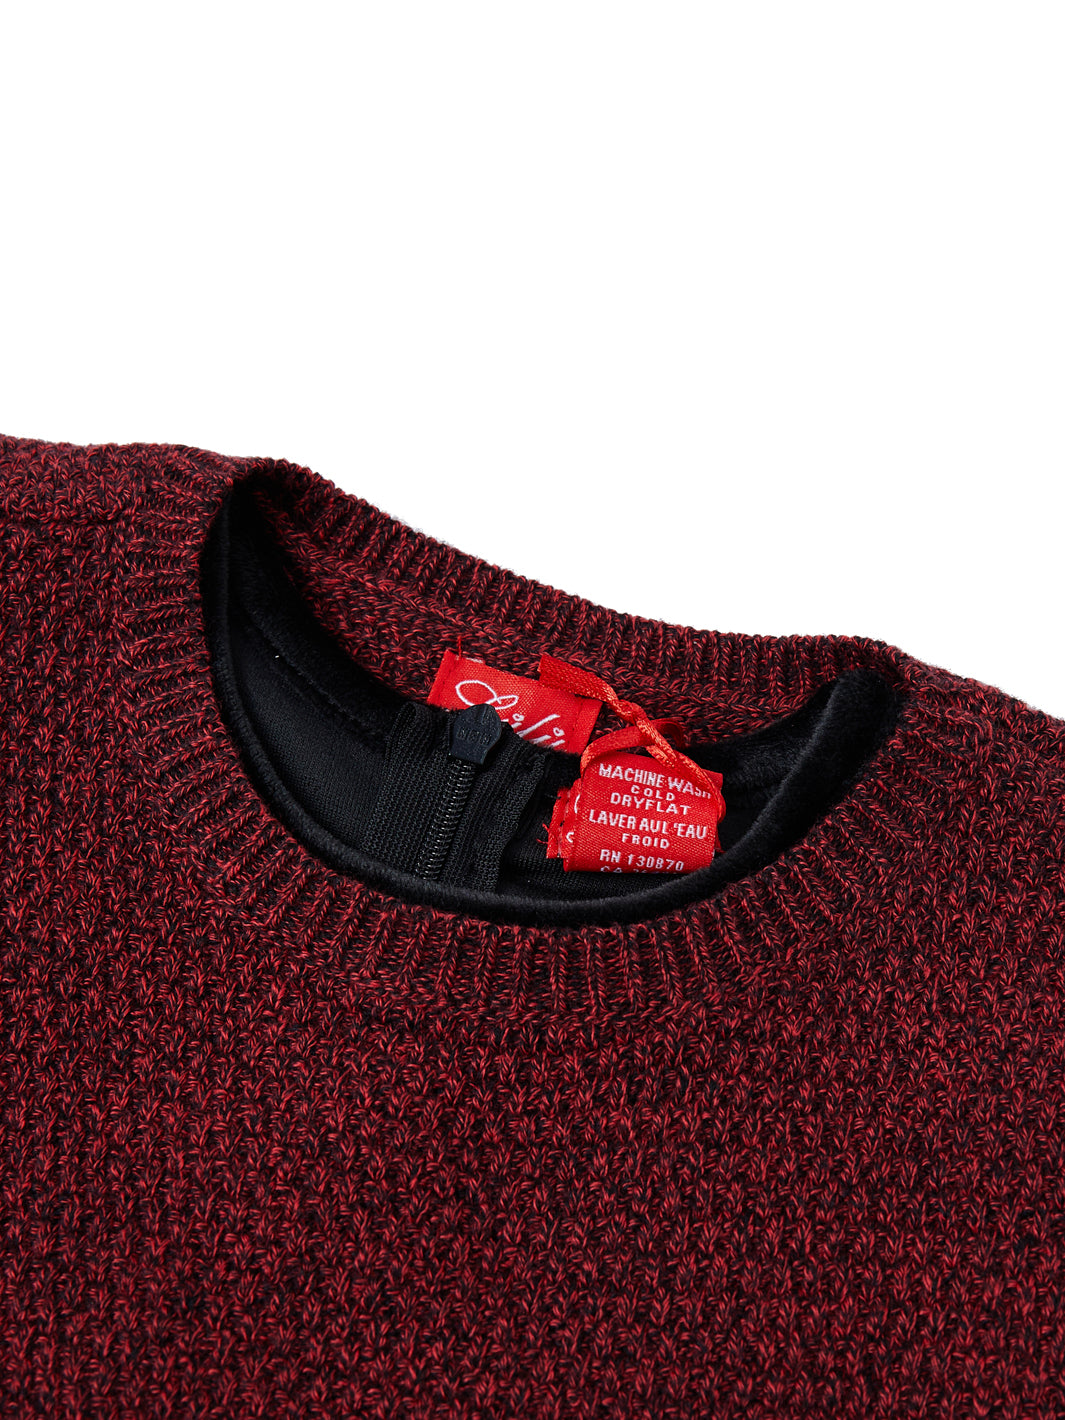 Knit Vest Robe - Black Red Mix